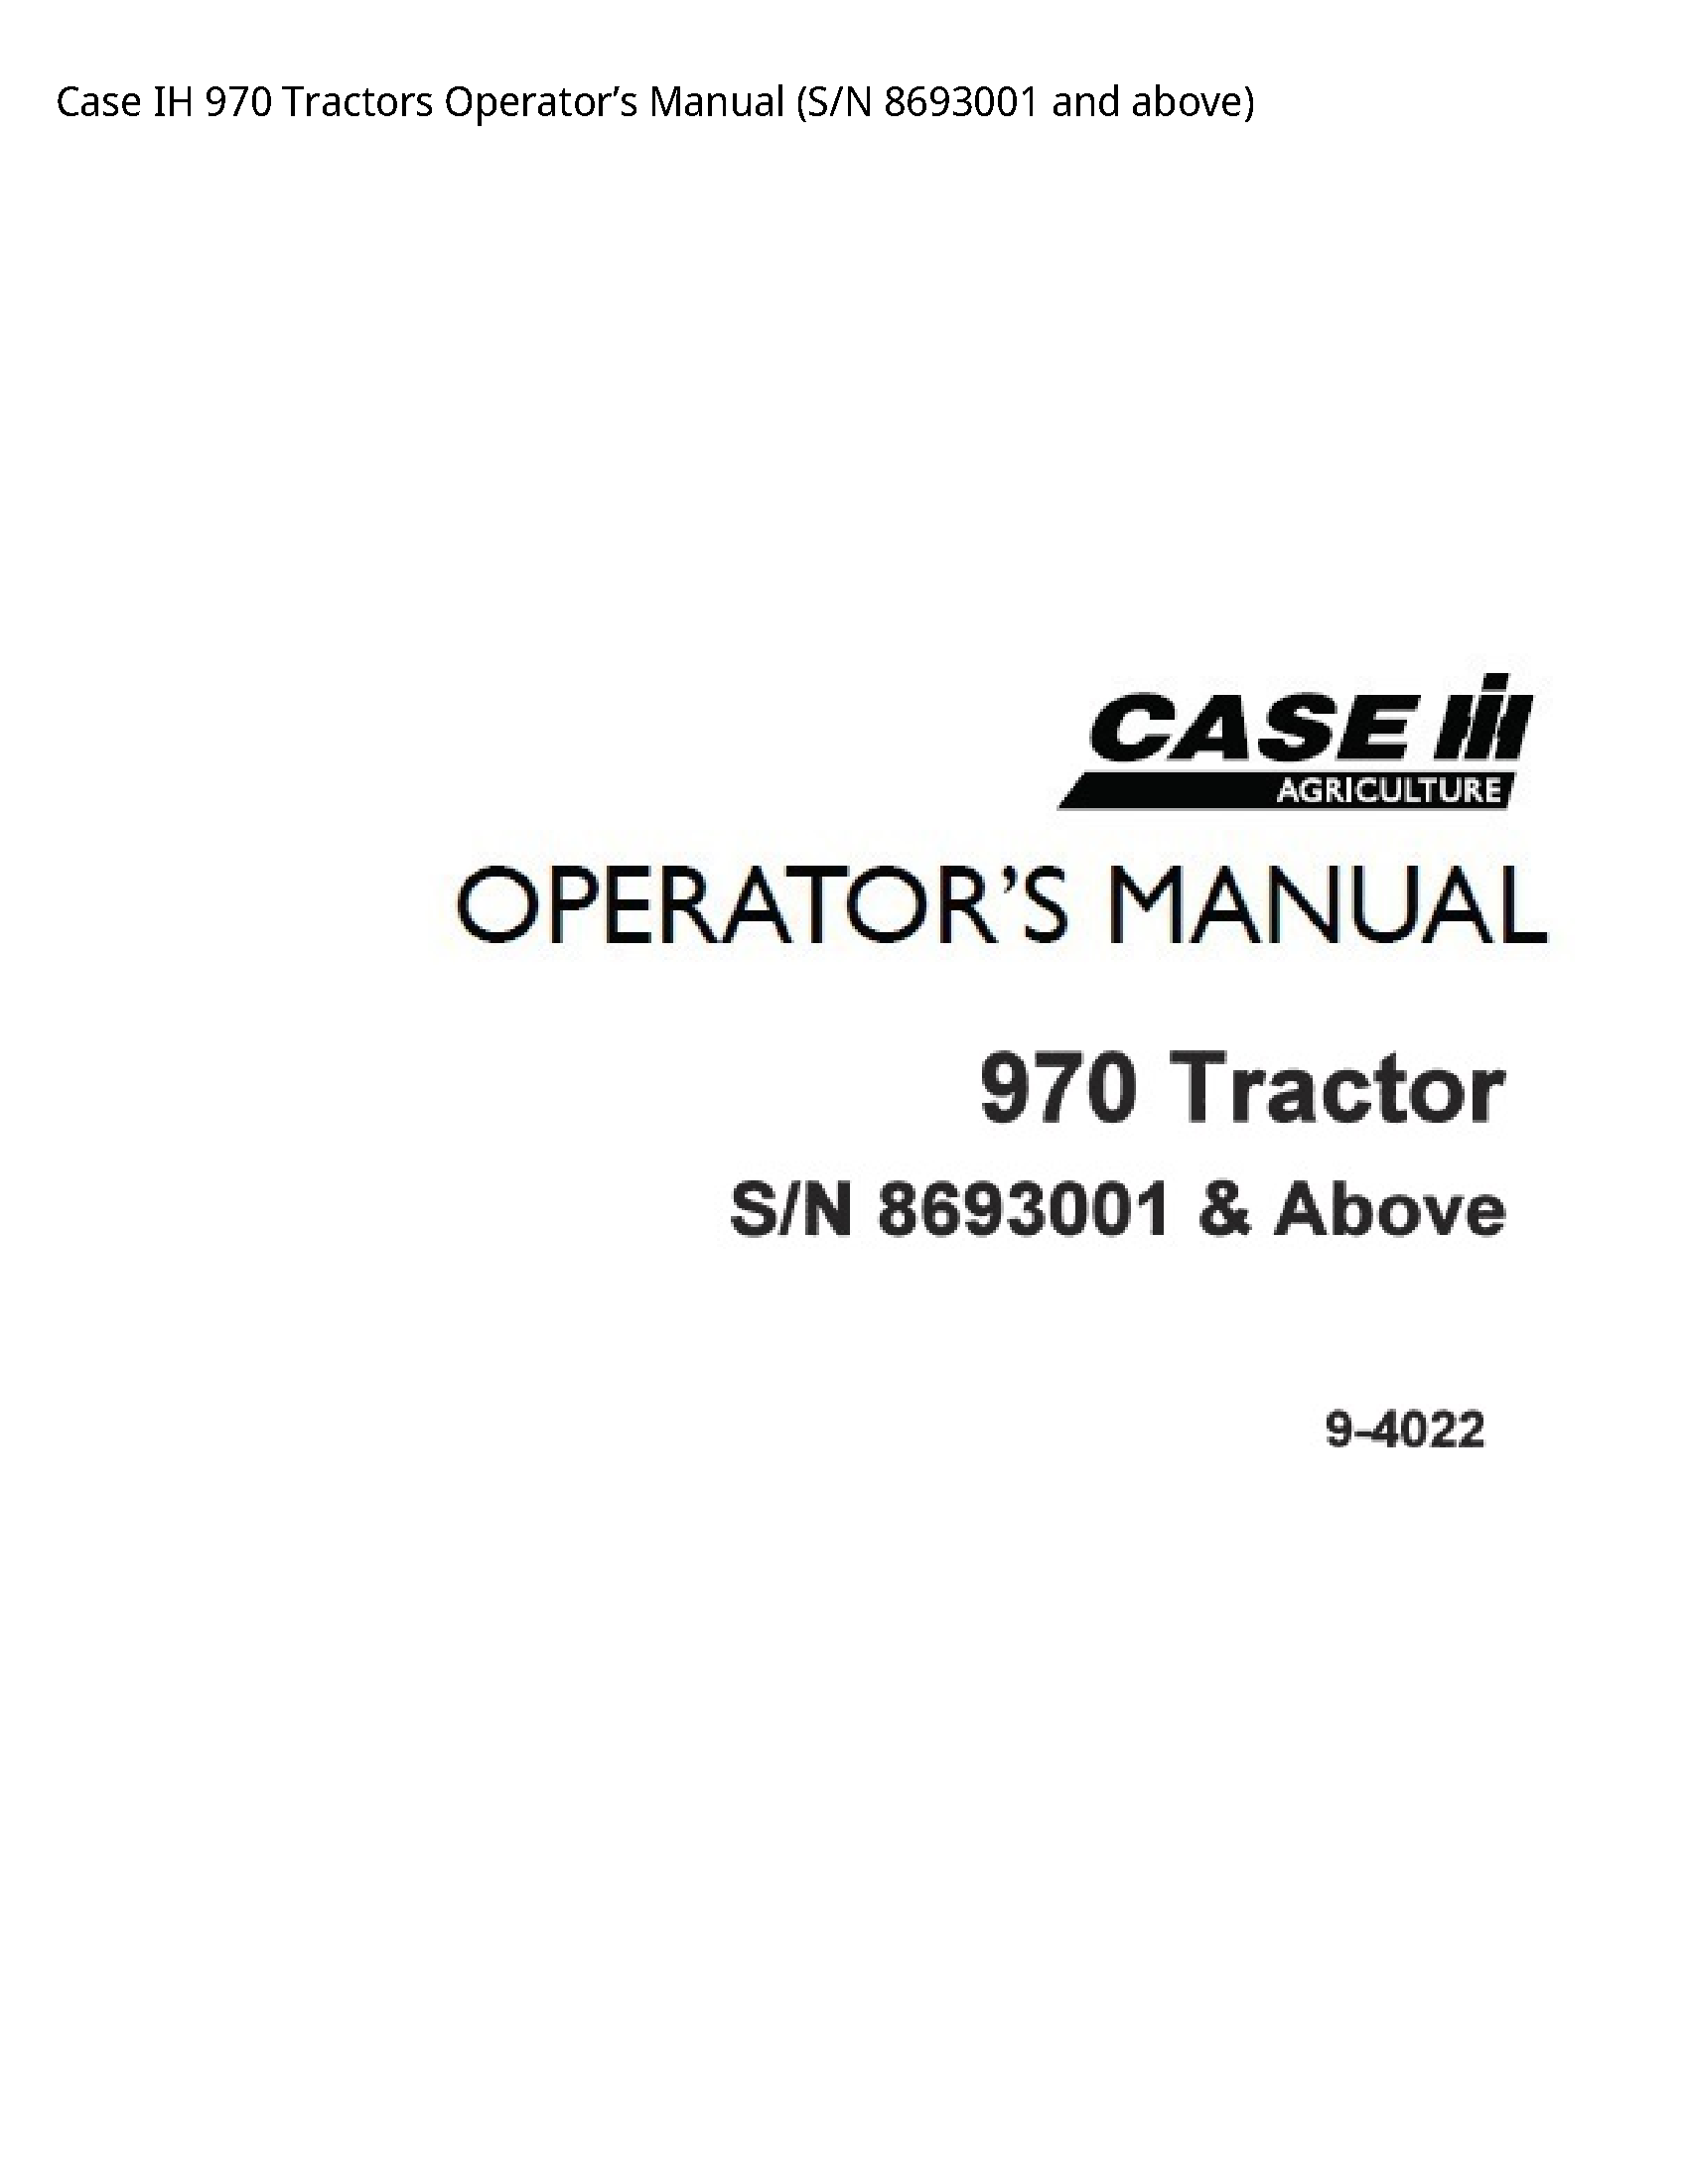 Case/Case IH 970 IH Tractors Operator’s manual